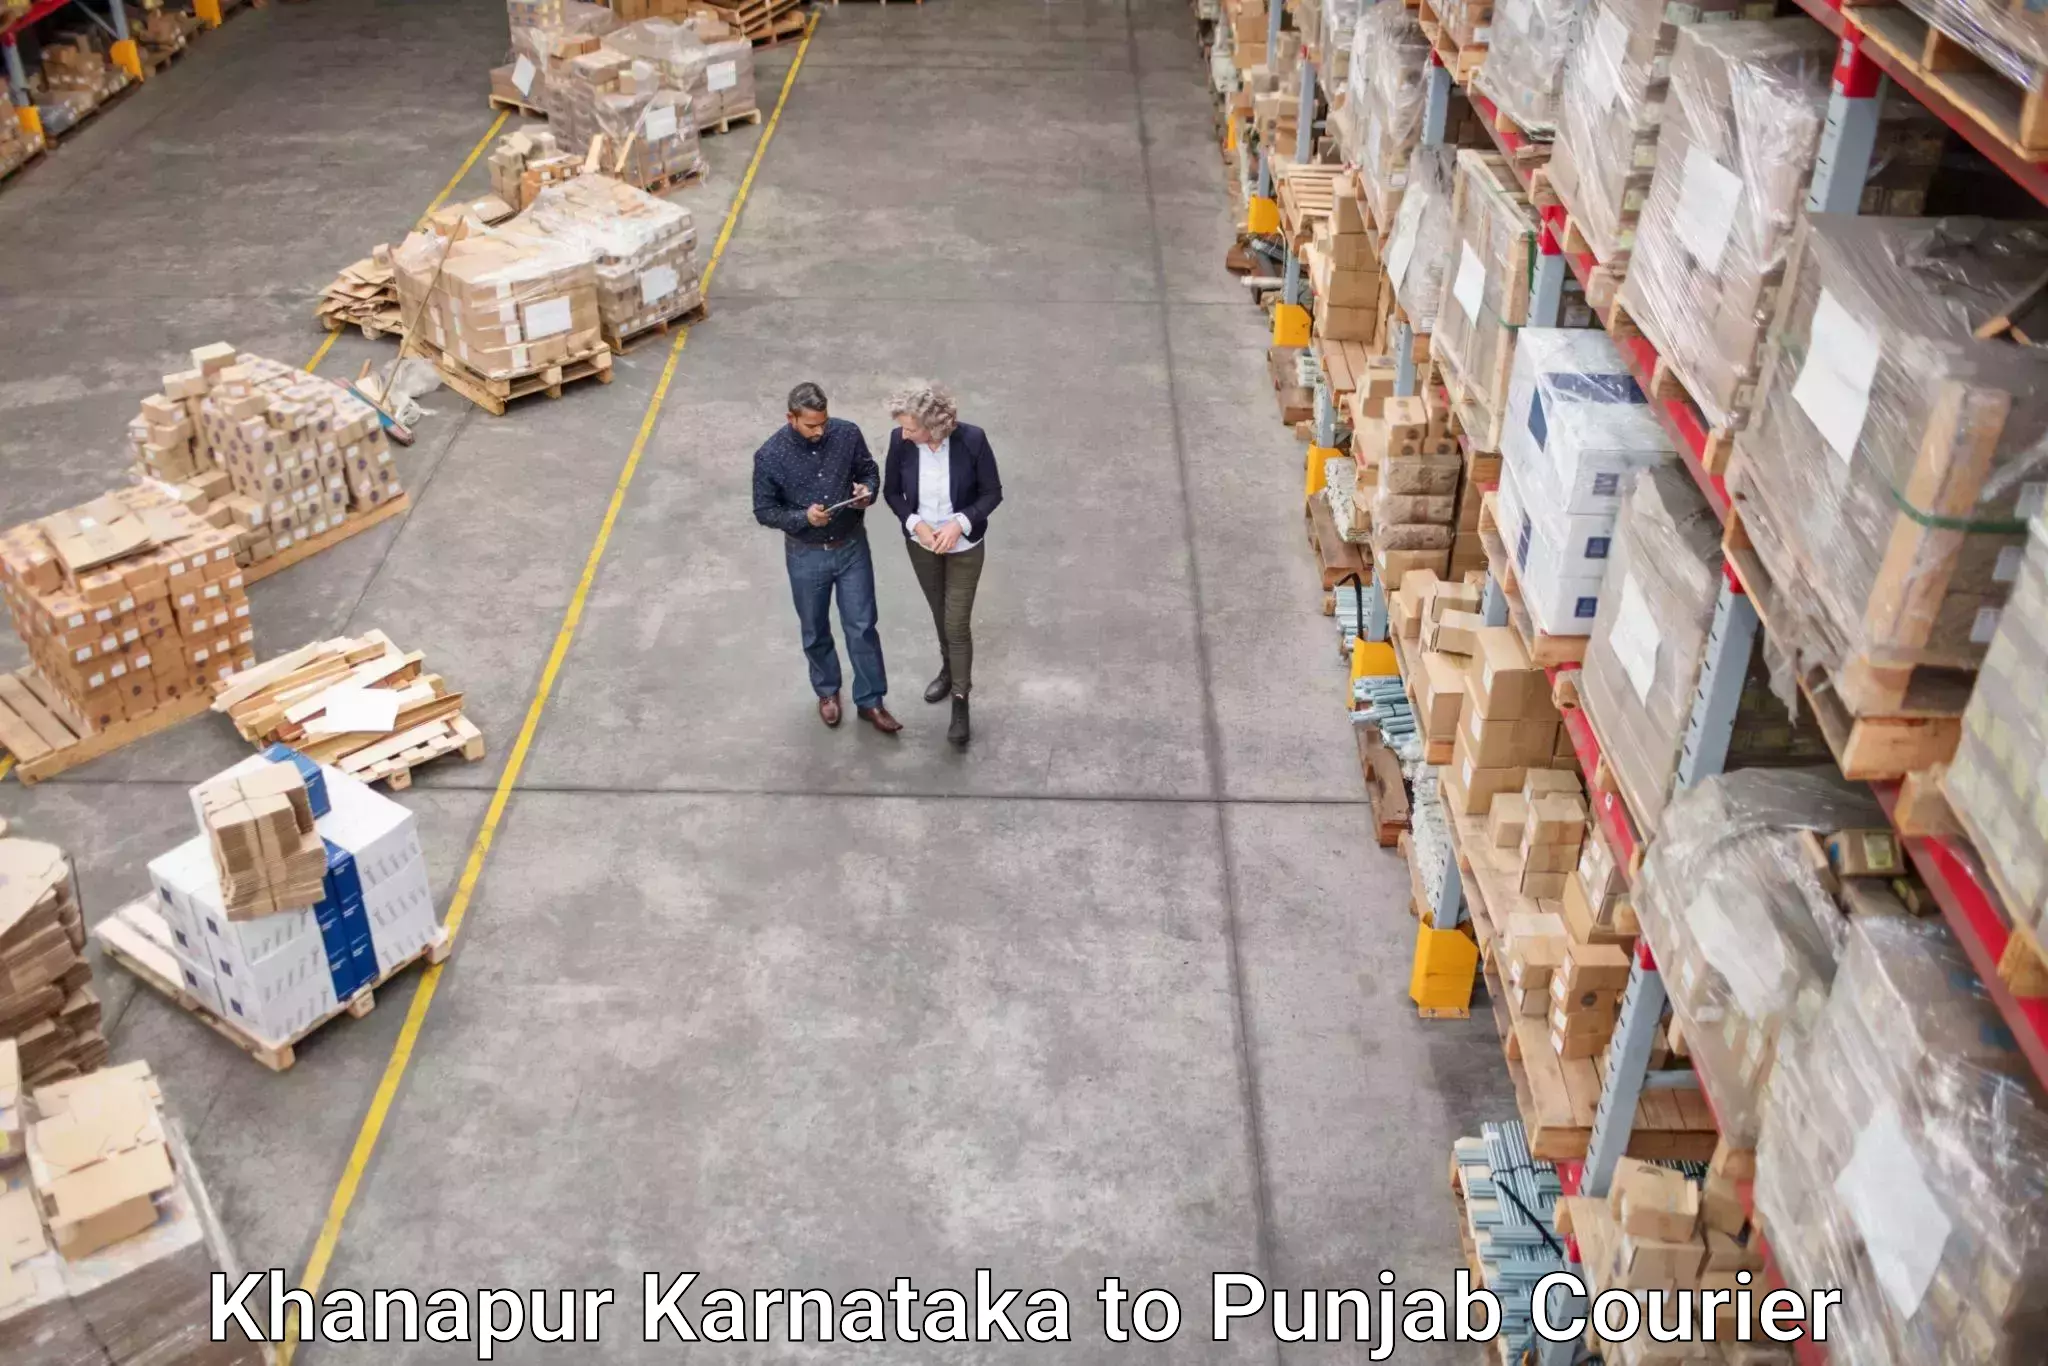 Courier service efficiency in Khanapur Karnataka to Nabha